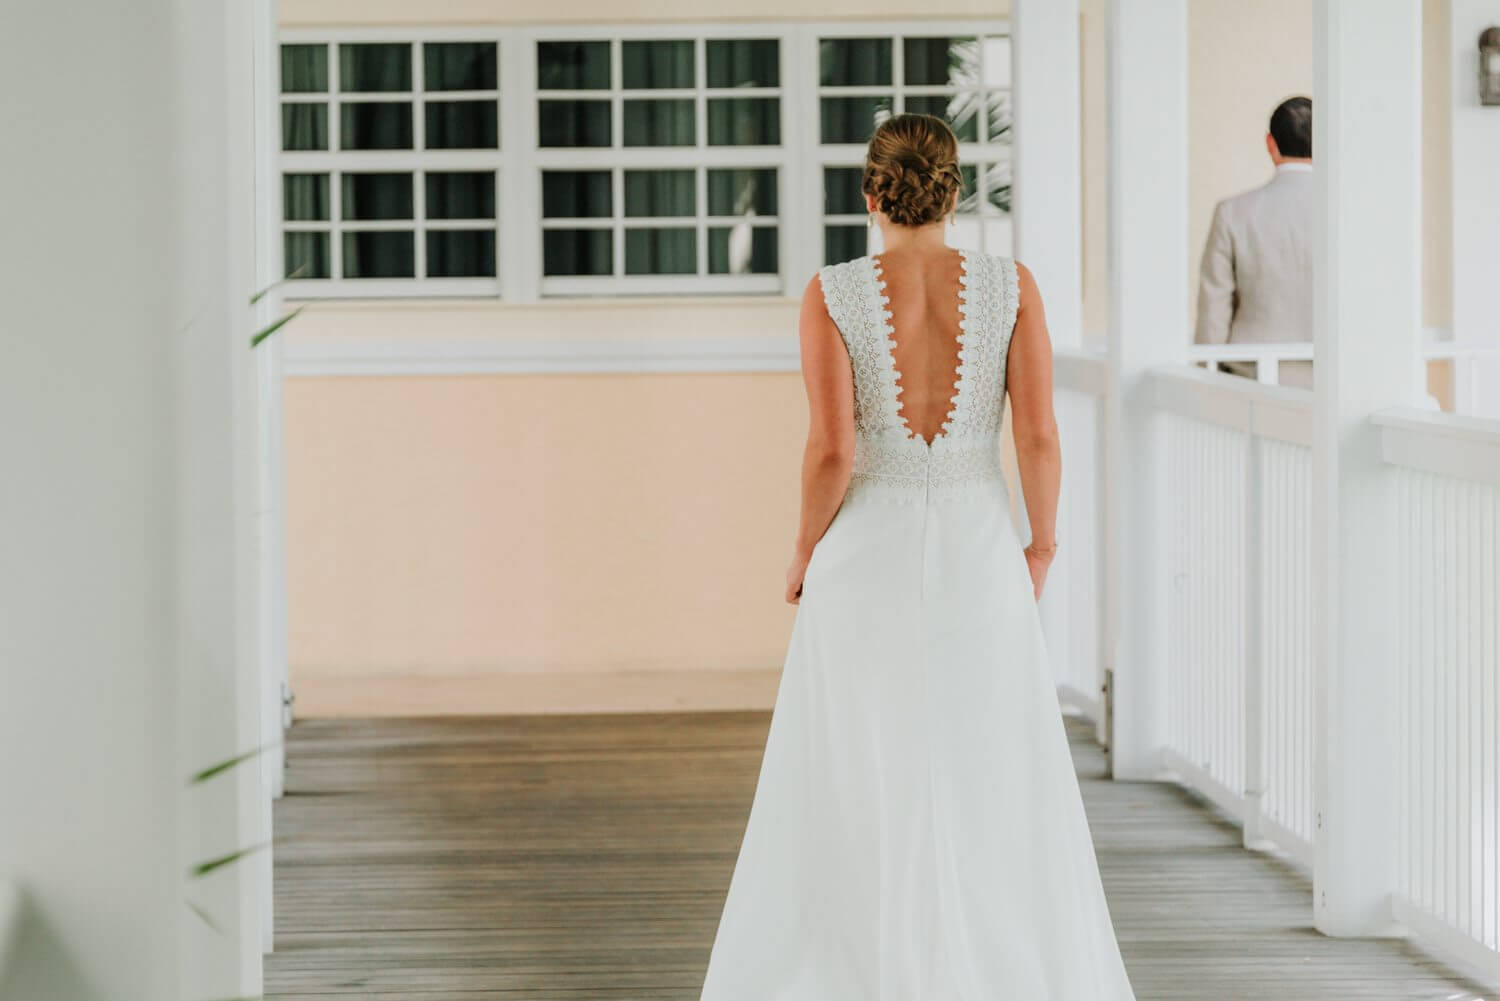 A bride walks down the porch of Ocean Key Resort Spa in Key West, wearing a white wedding dress.